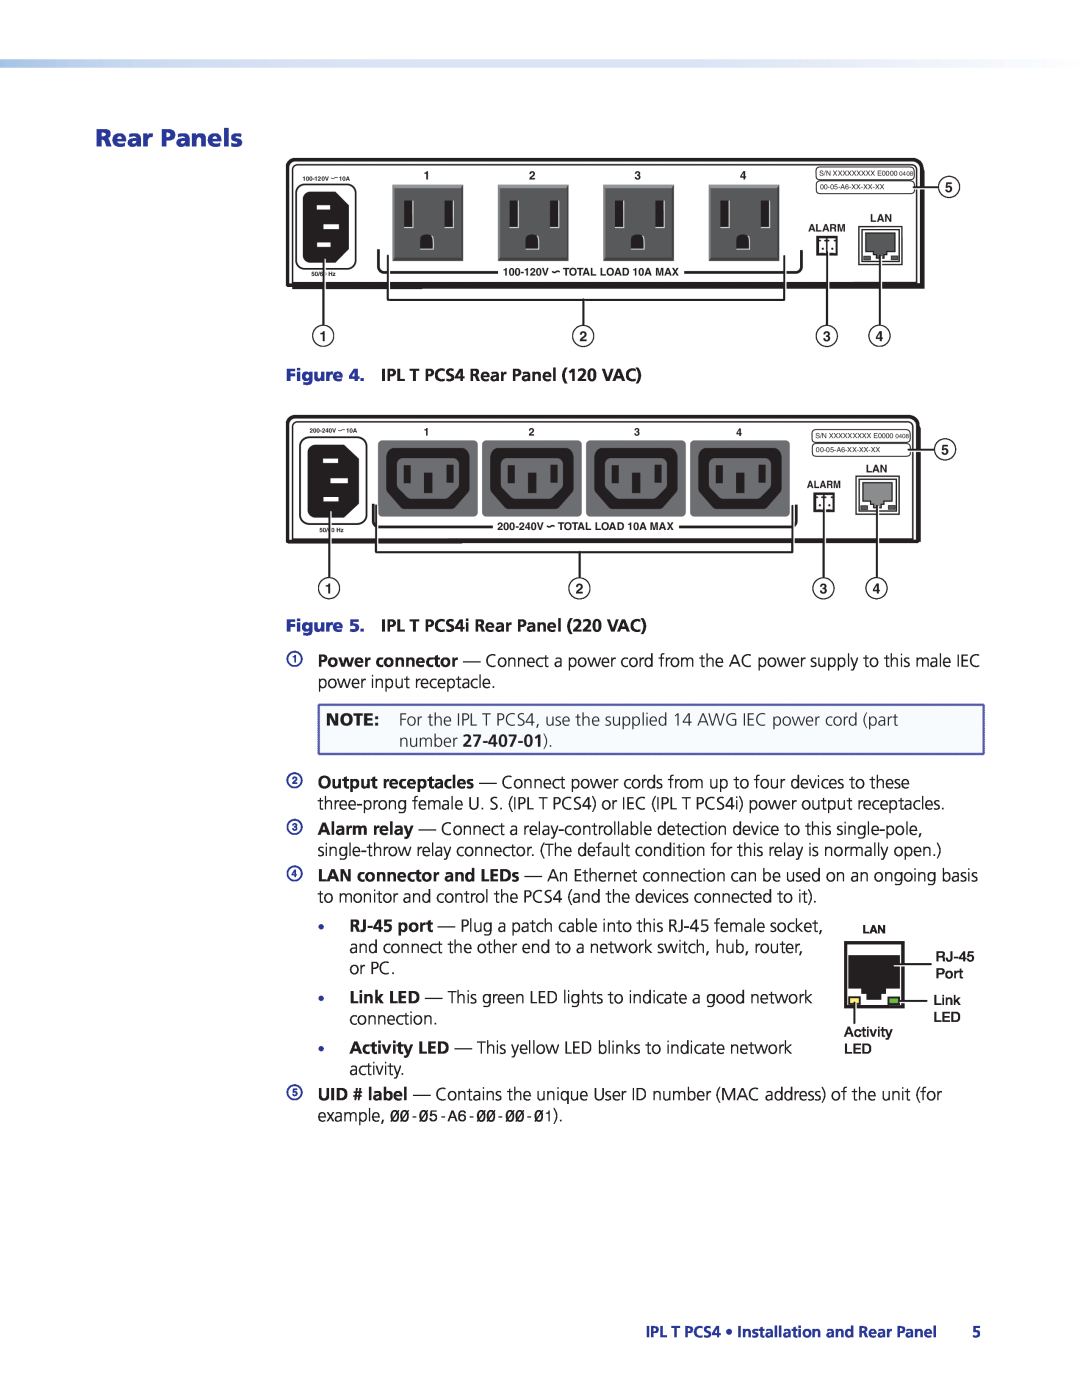 Extron electronic manual Rear Panels, IPL T PCS4i Rear Panel 220 VAC 